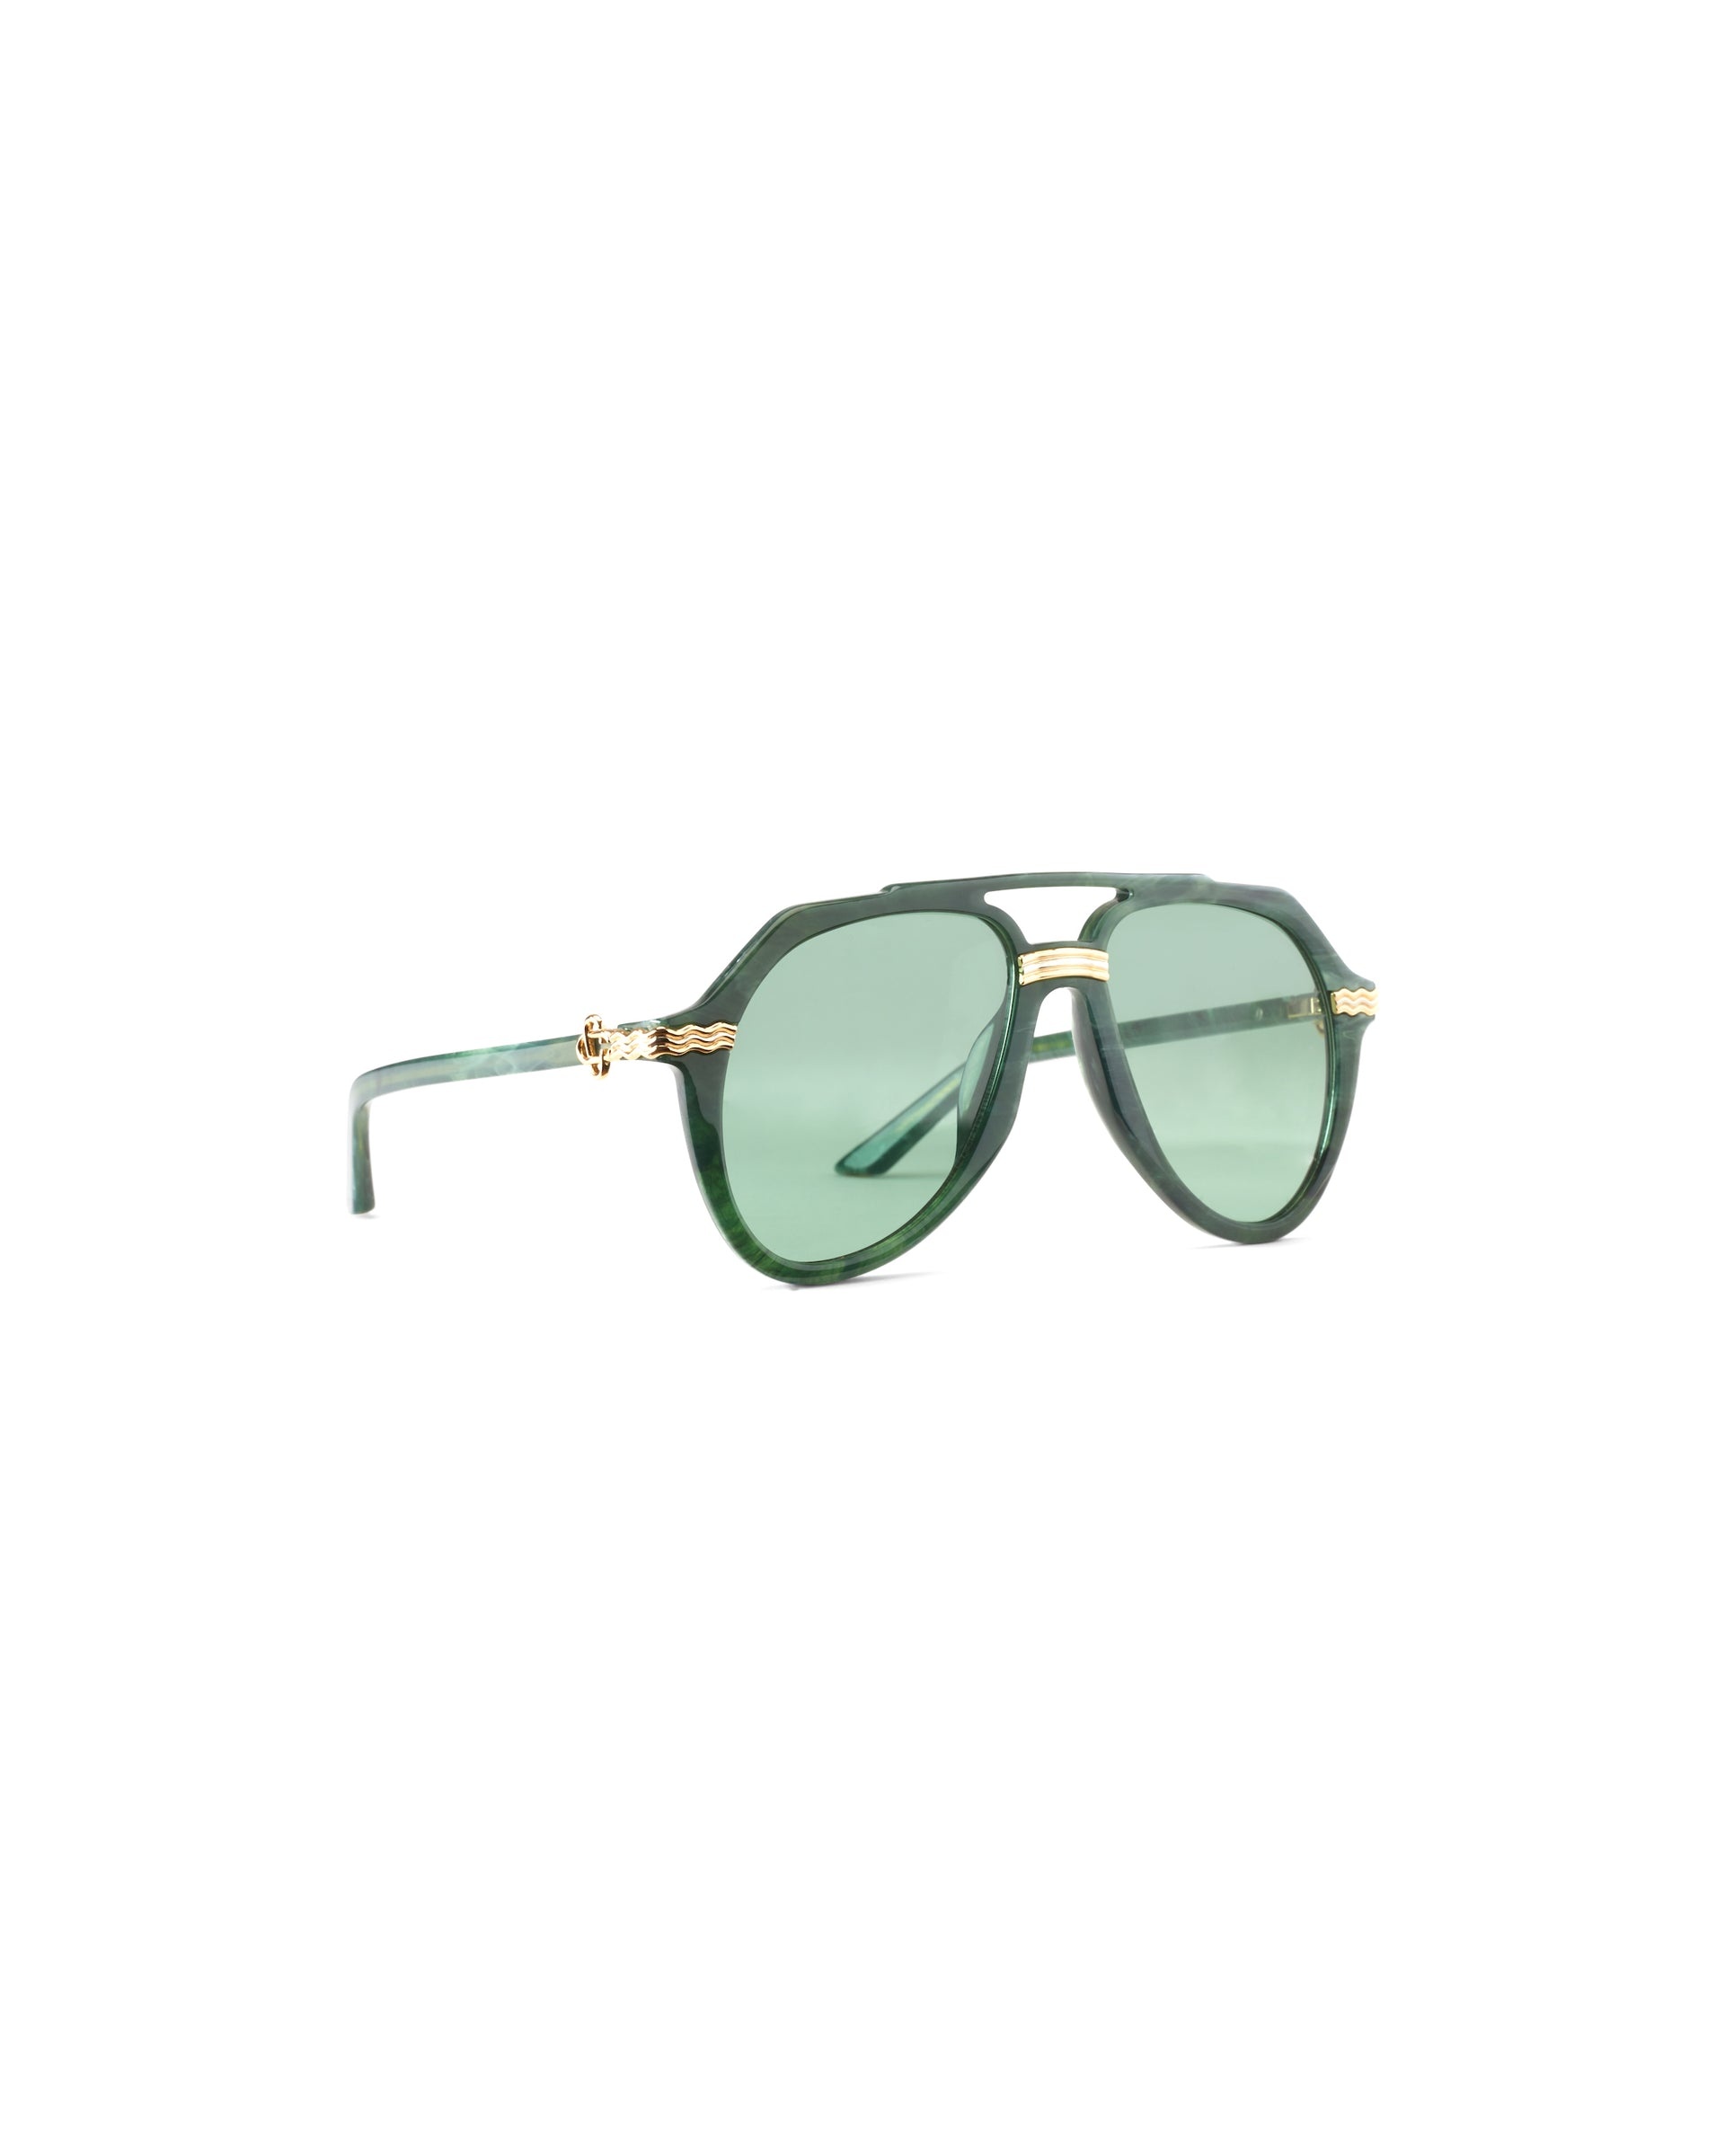 Rajio Green & Gold Sunglasses - 1